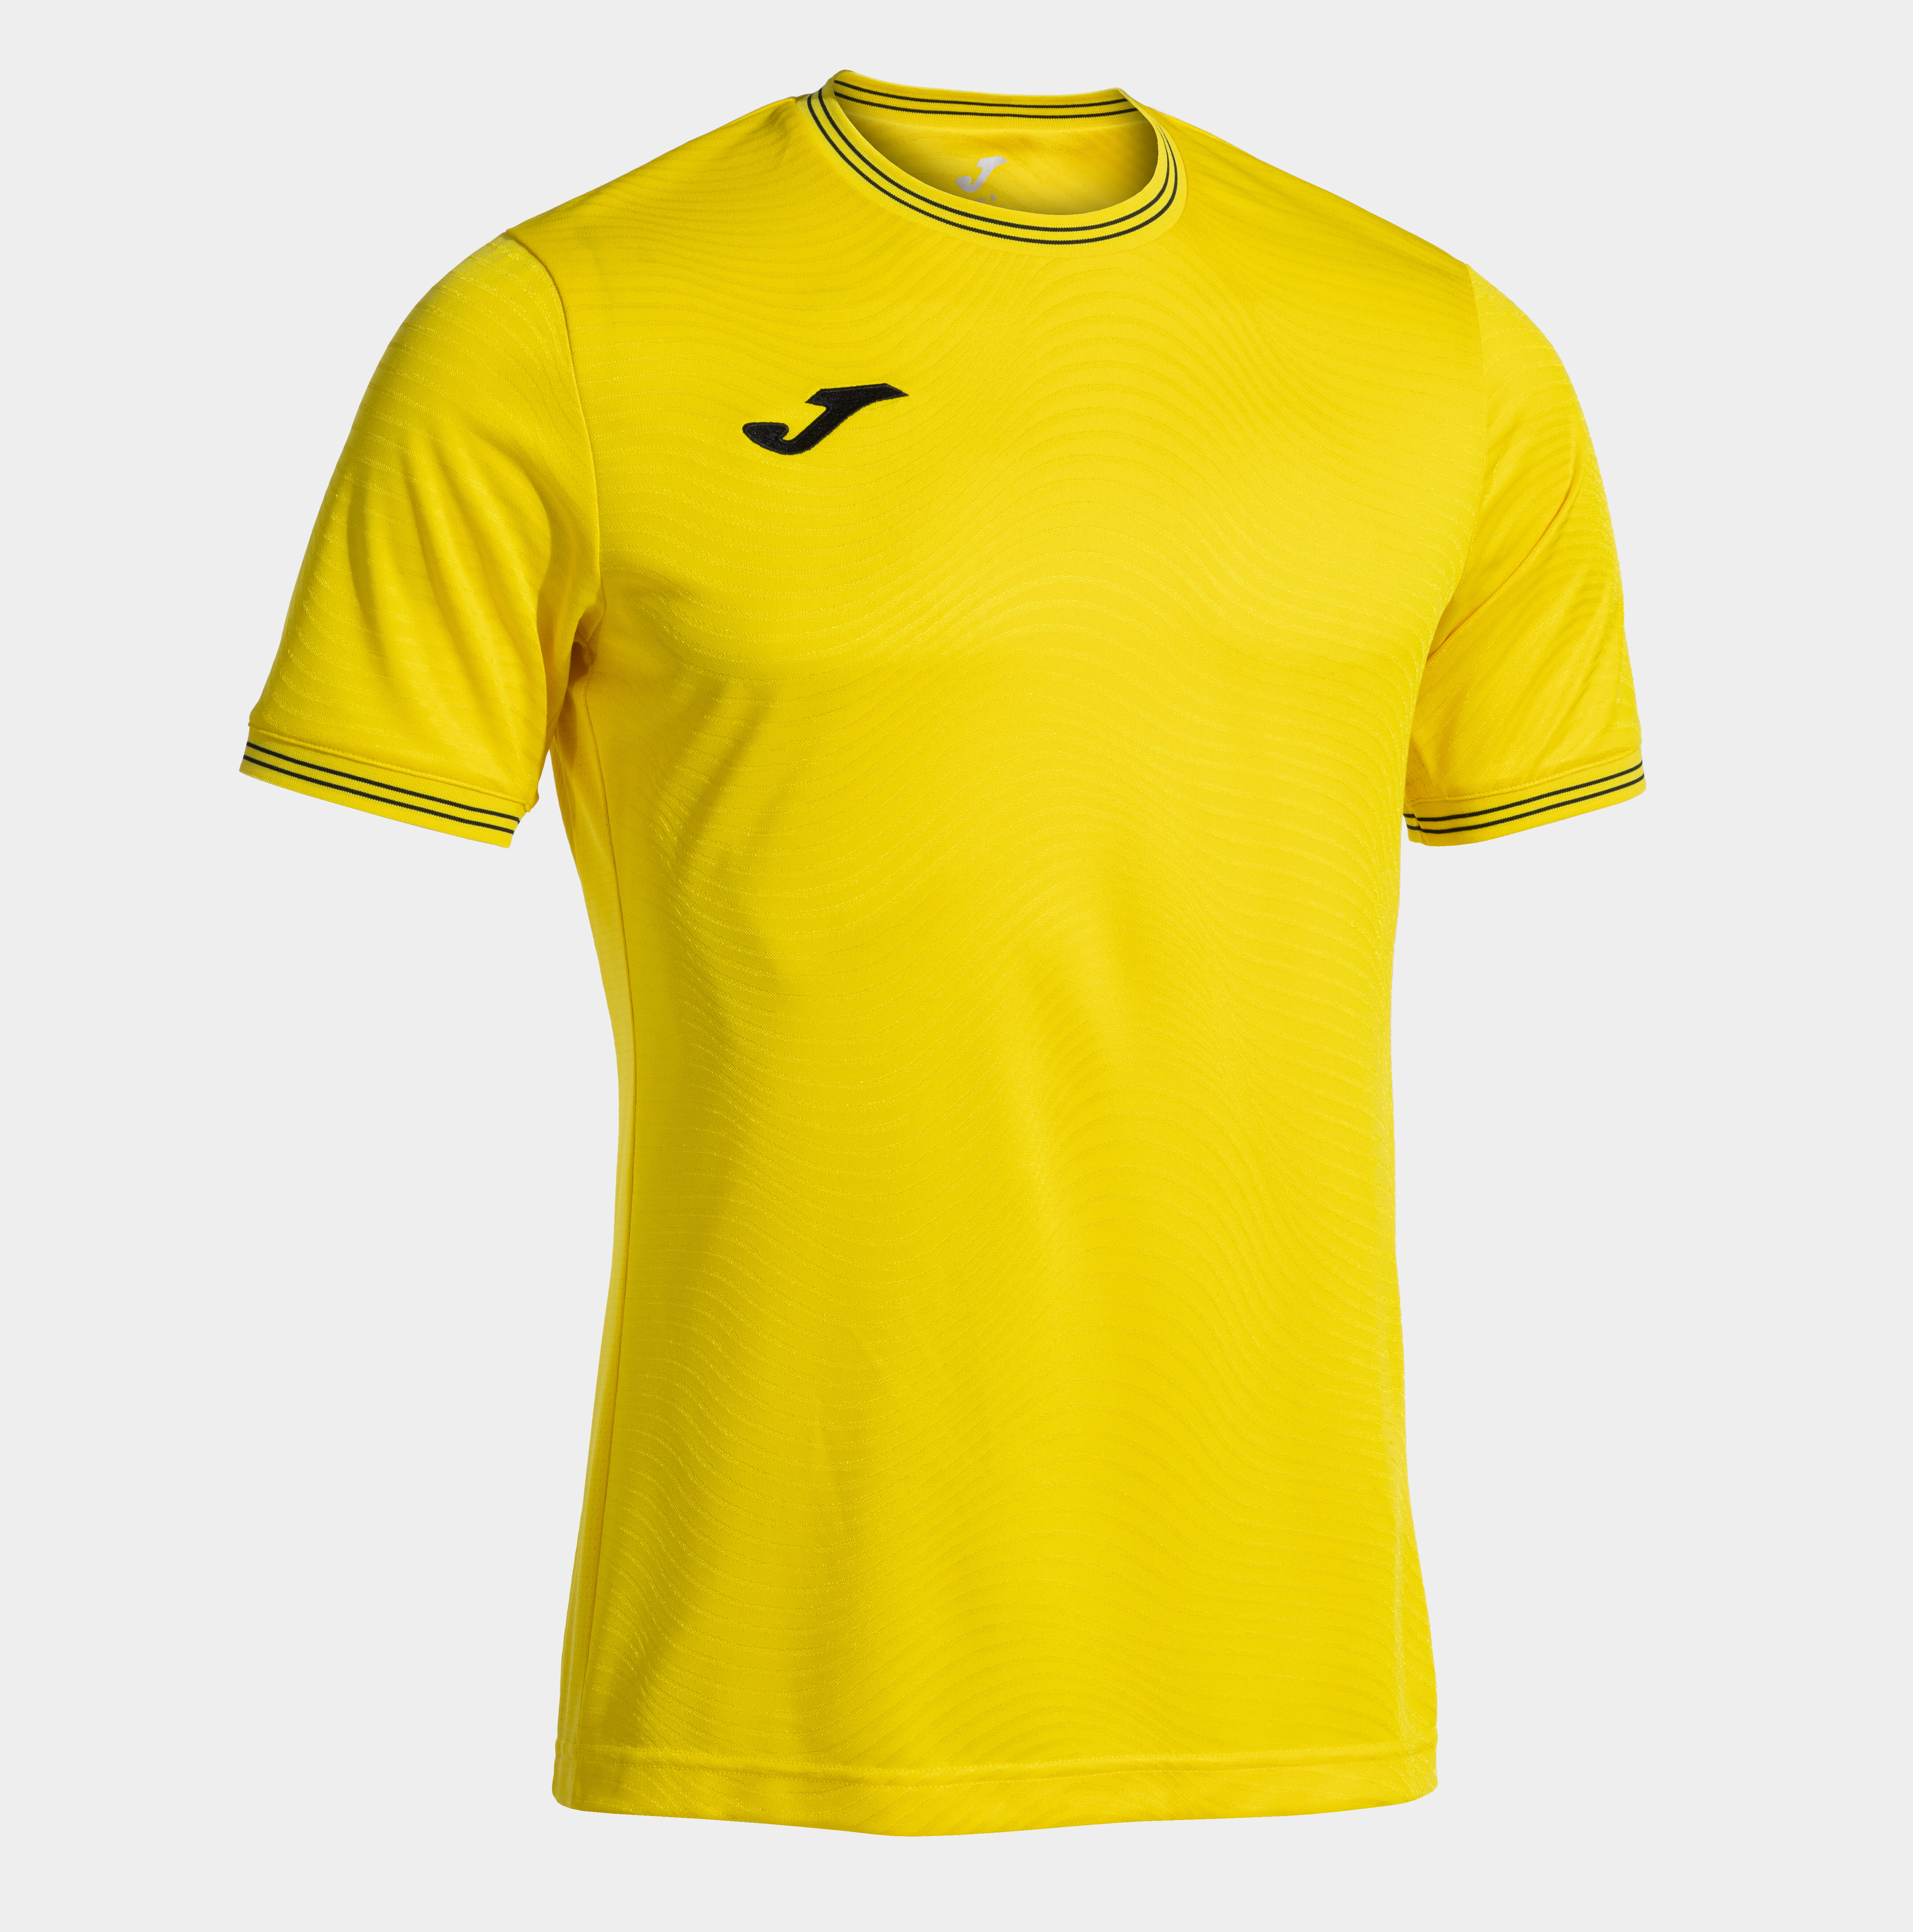 Camiseta manga corta hombre Toletum V amarillo